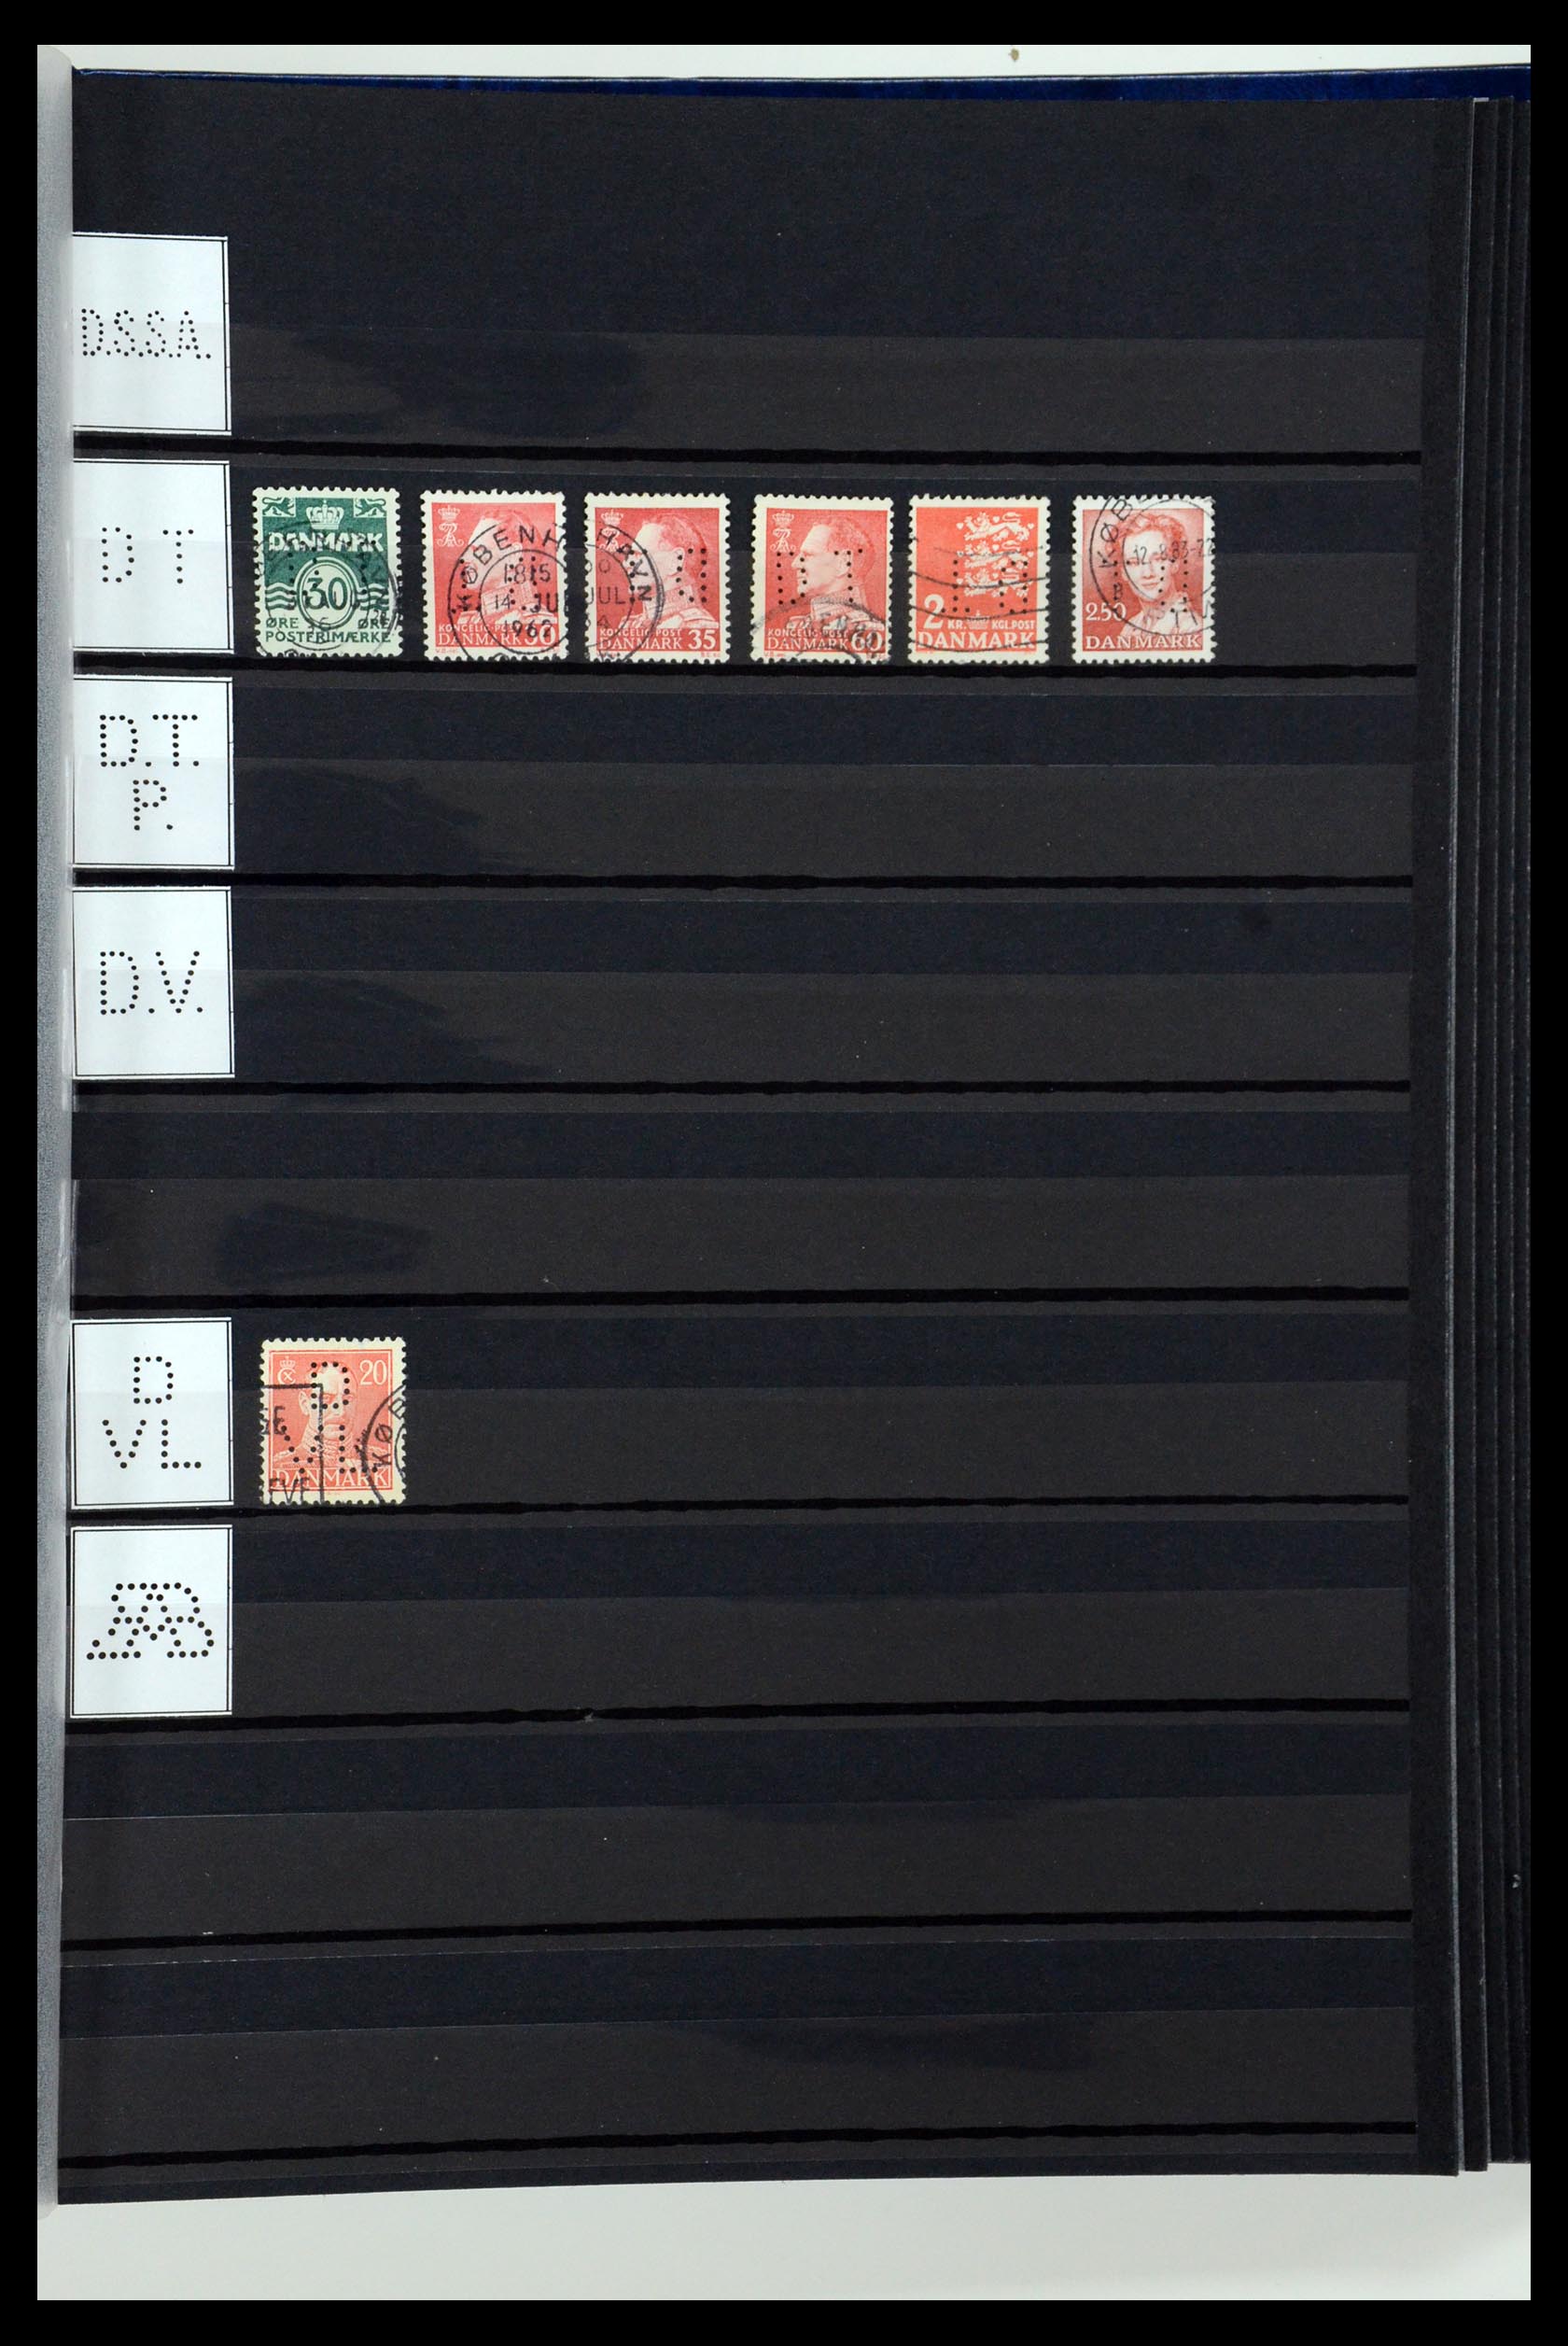 36396 042 - Stamp collection 36396 Denmark perfins.